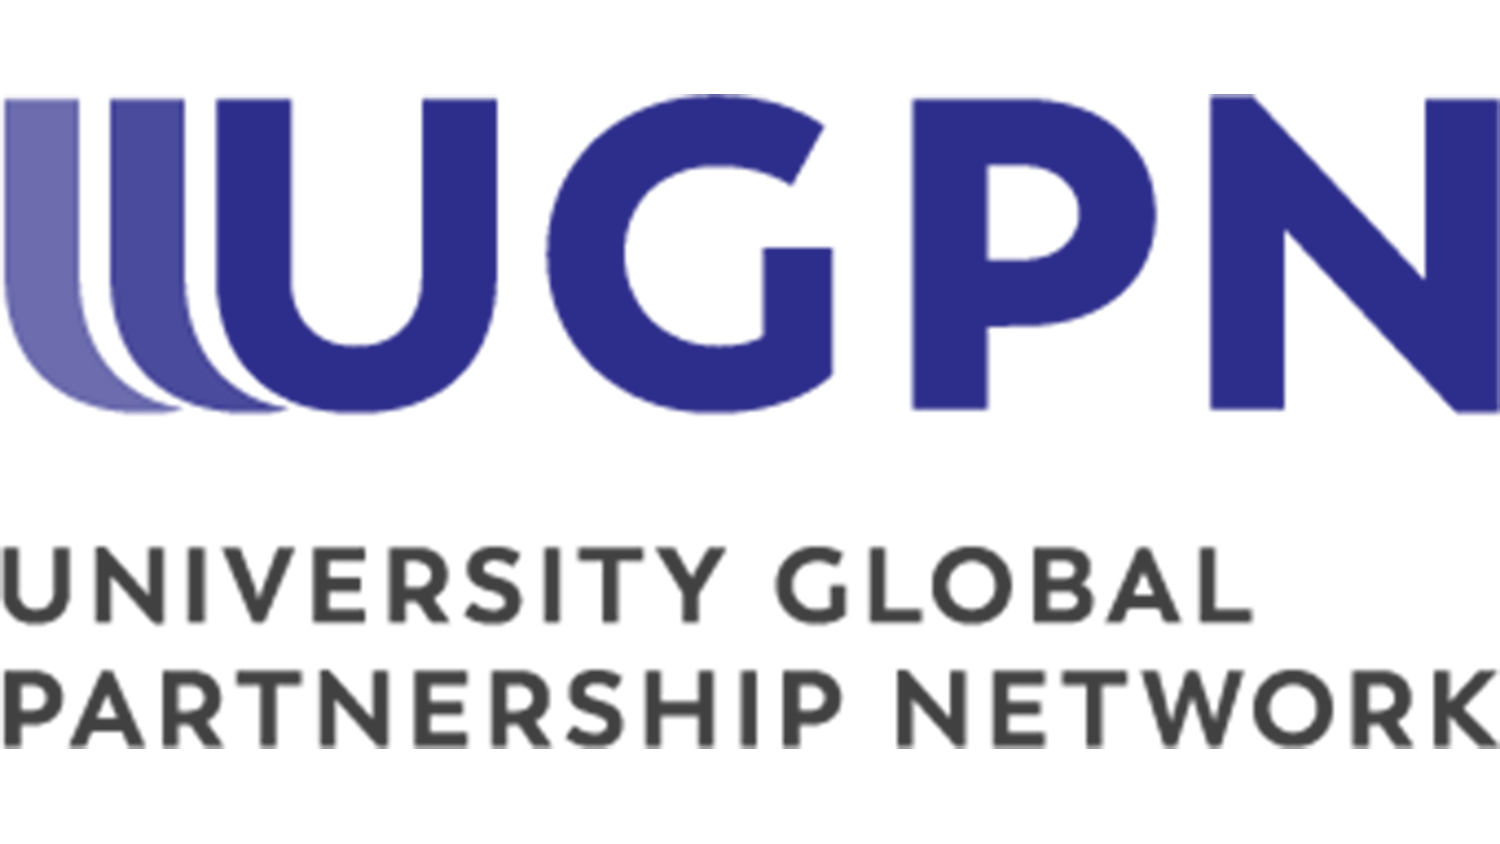 University Global Partnership Network logo